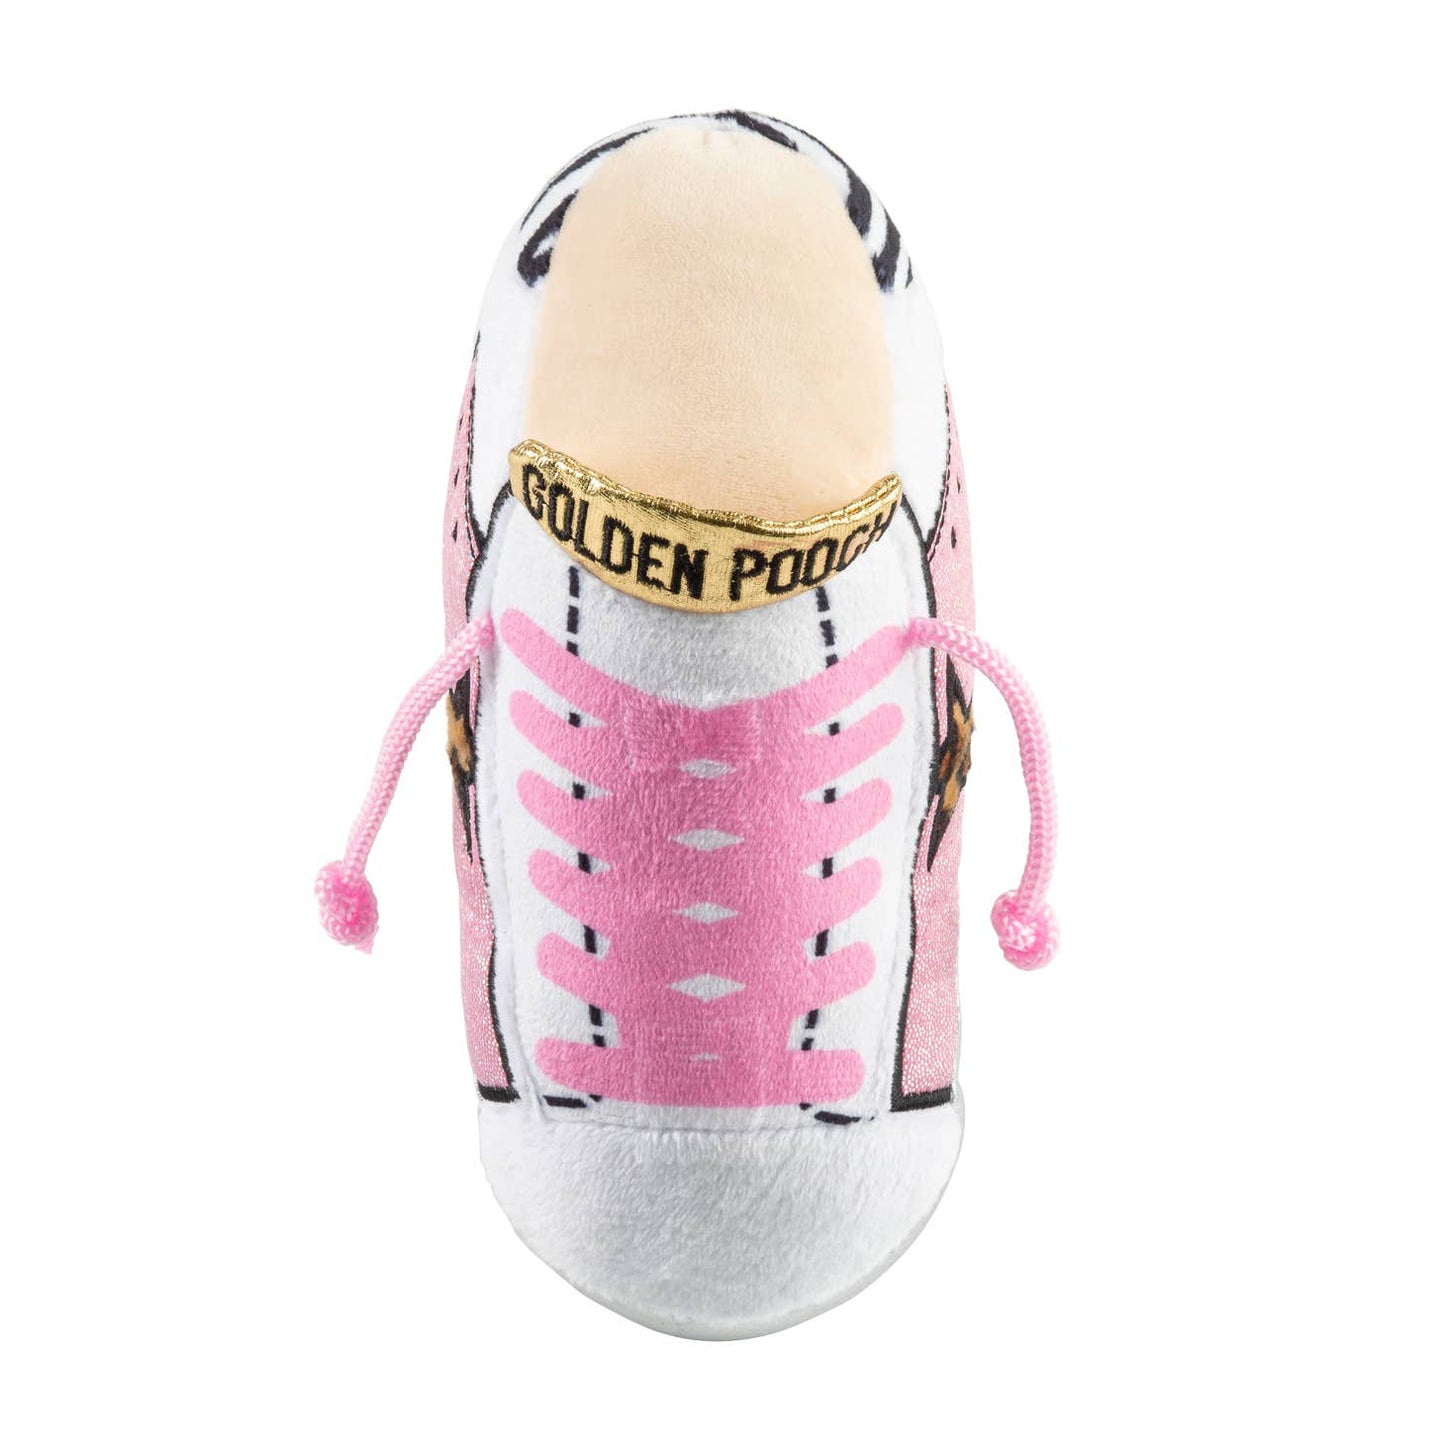 Golden Pooch - Pink Squeaker Dog Toy